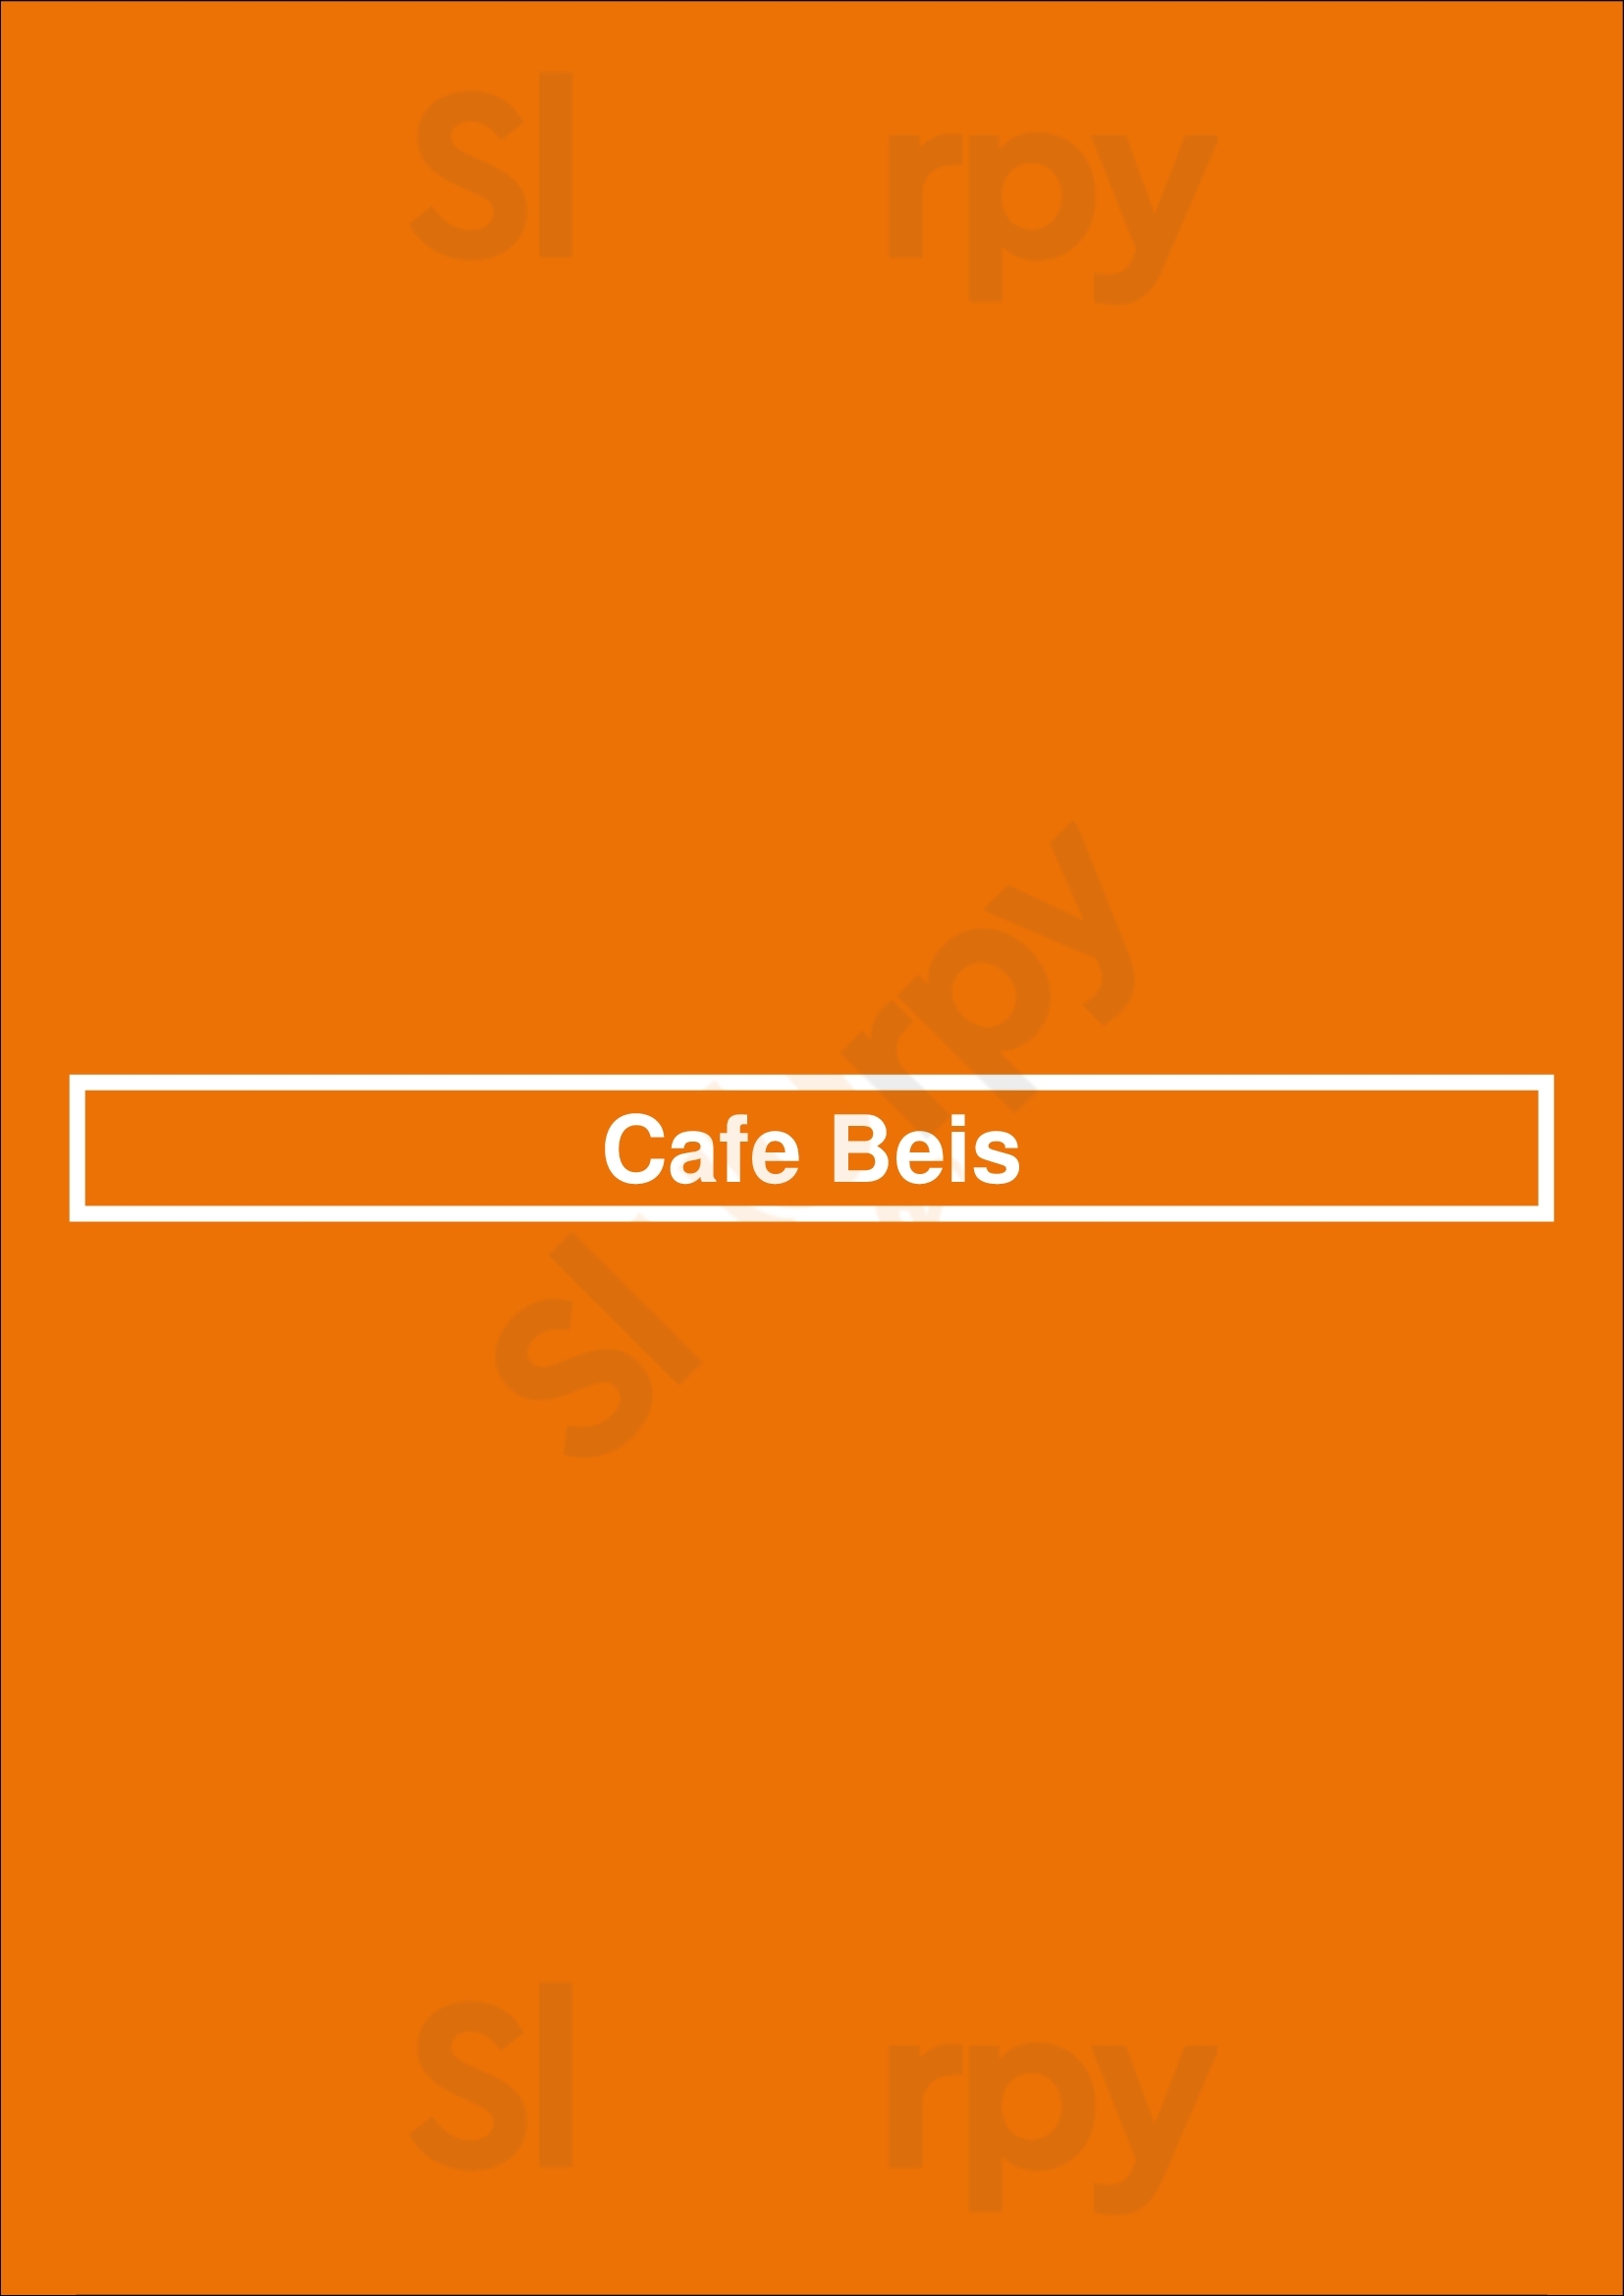 Cafe Beis Amsterdam Menu - 1